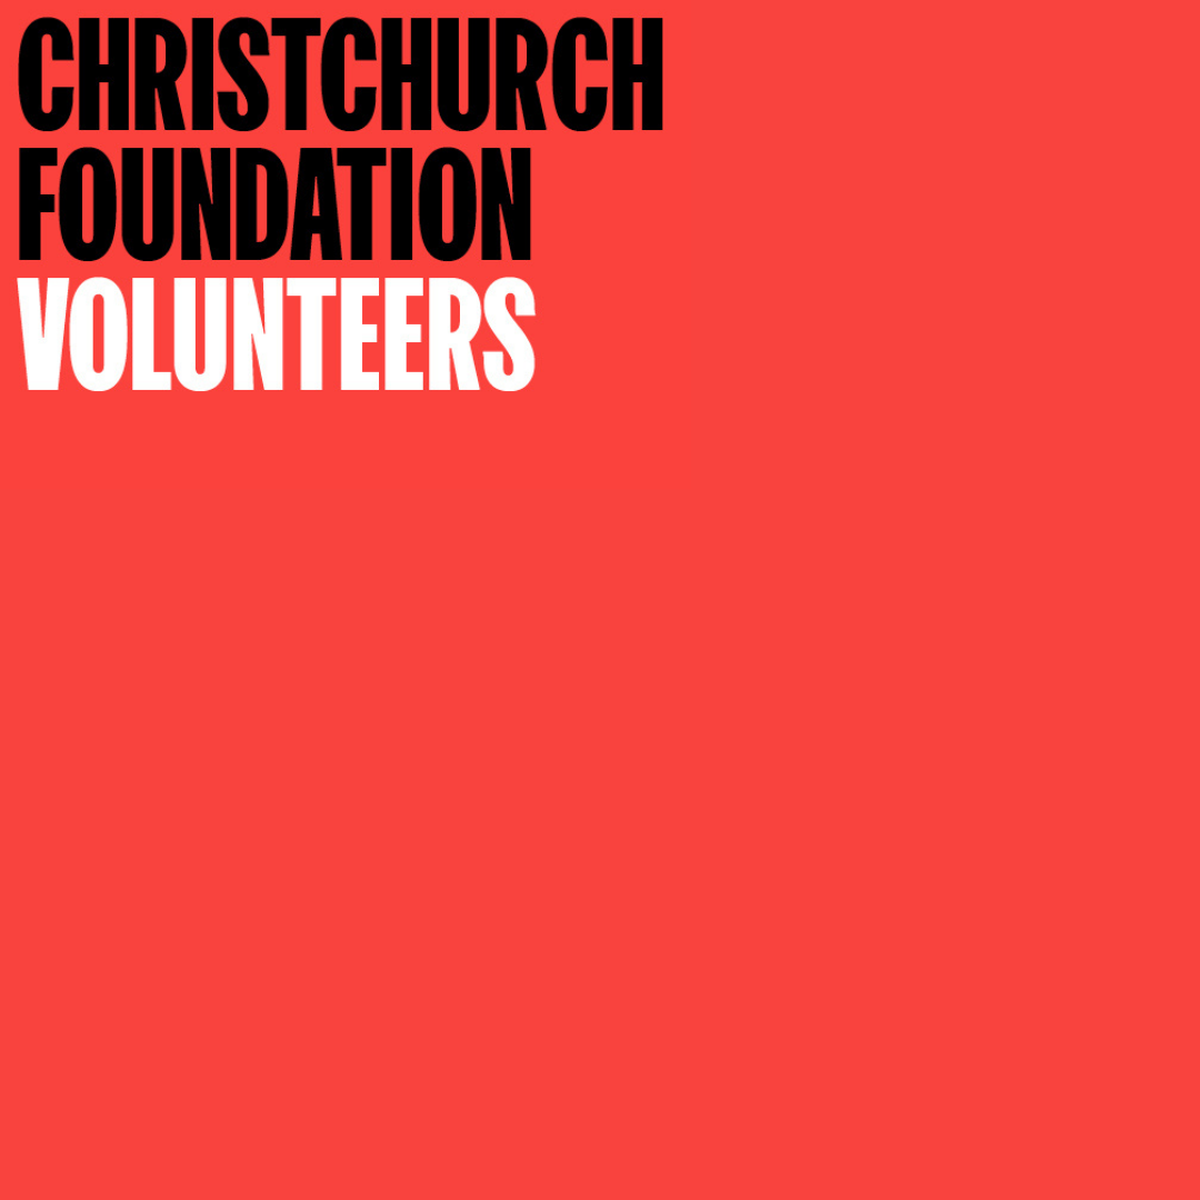 Christchurch Foundation Volunteers